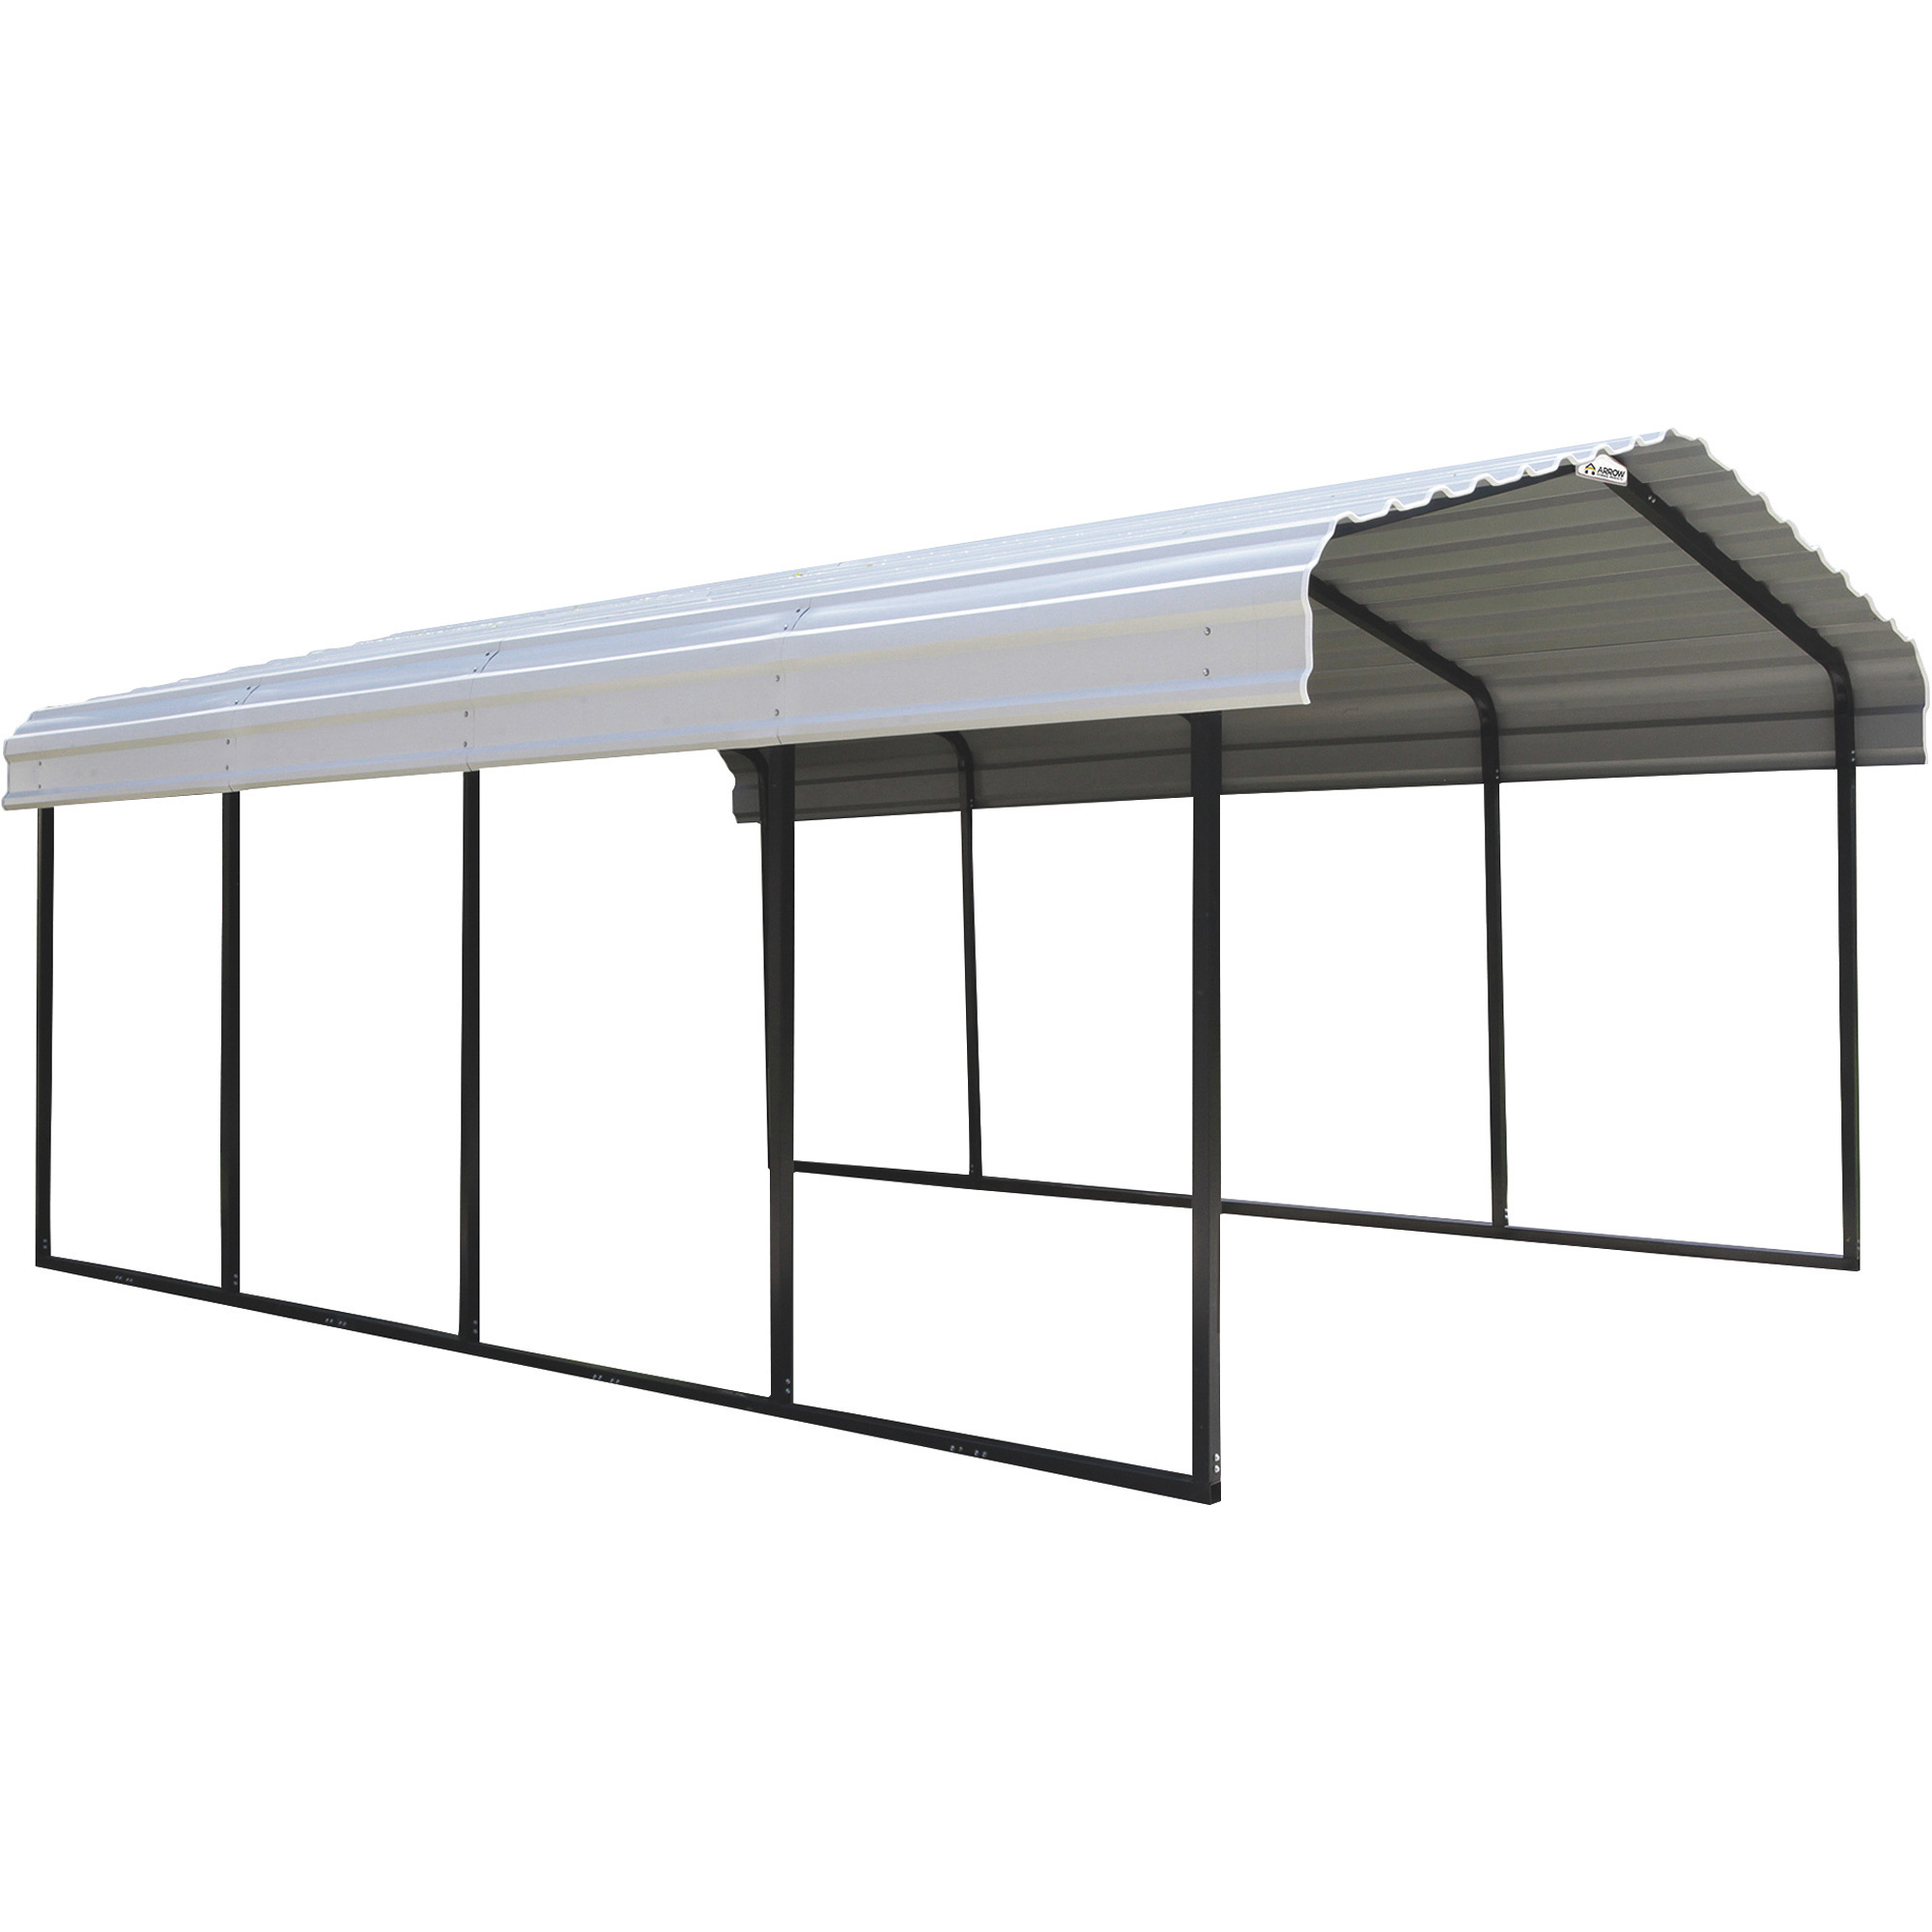 Steel Carport — Eggshell, 24ft.L x 12ft.W x 7ft.H, Model - Arrow CPH122407